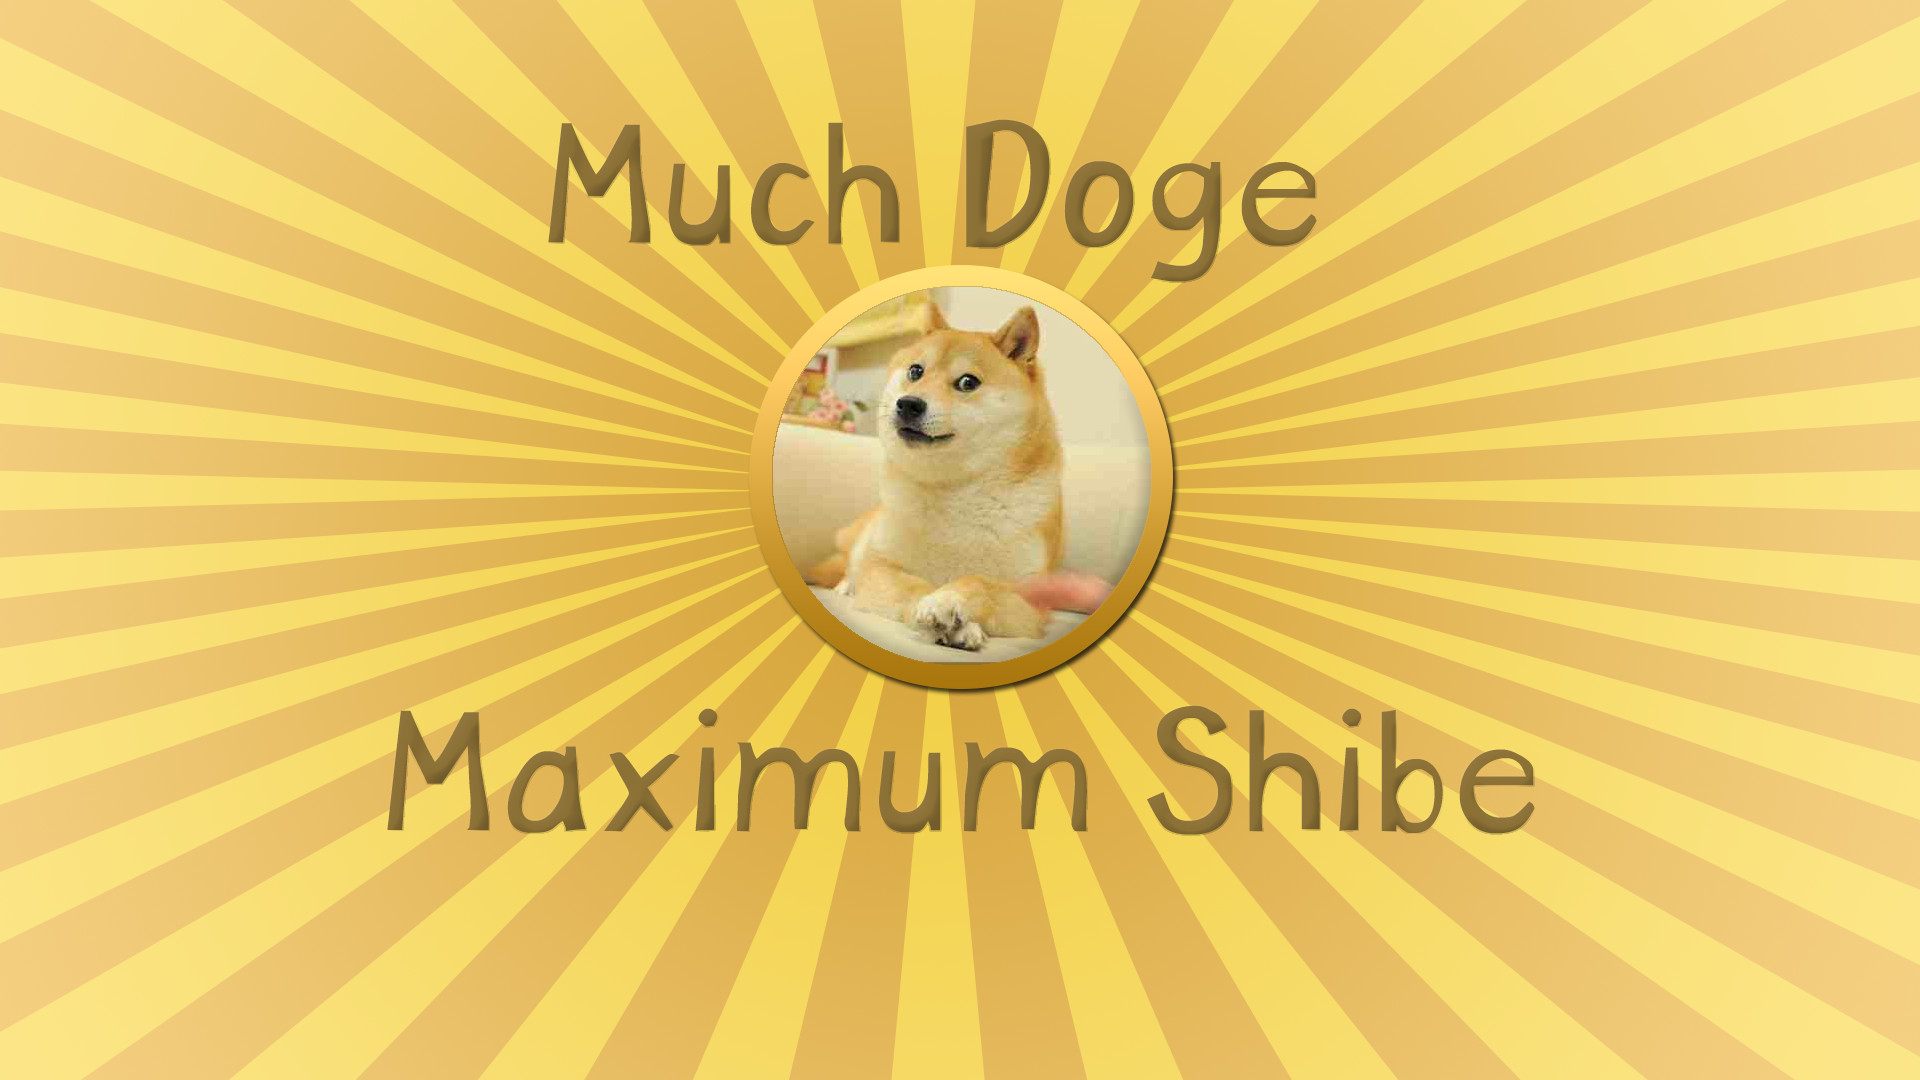 1920x1080 Doge wallpaper | Memes doe | Pinterest | Wallpapers, Meme and Doge